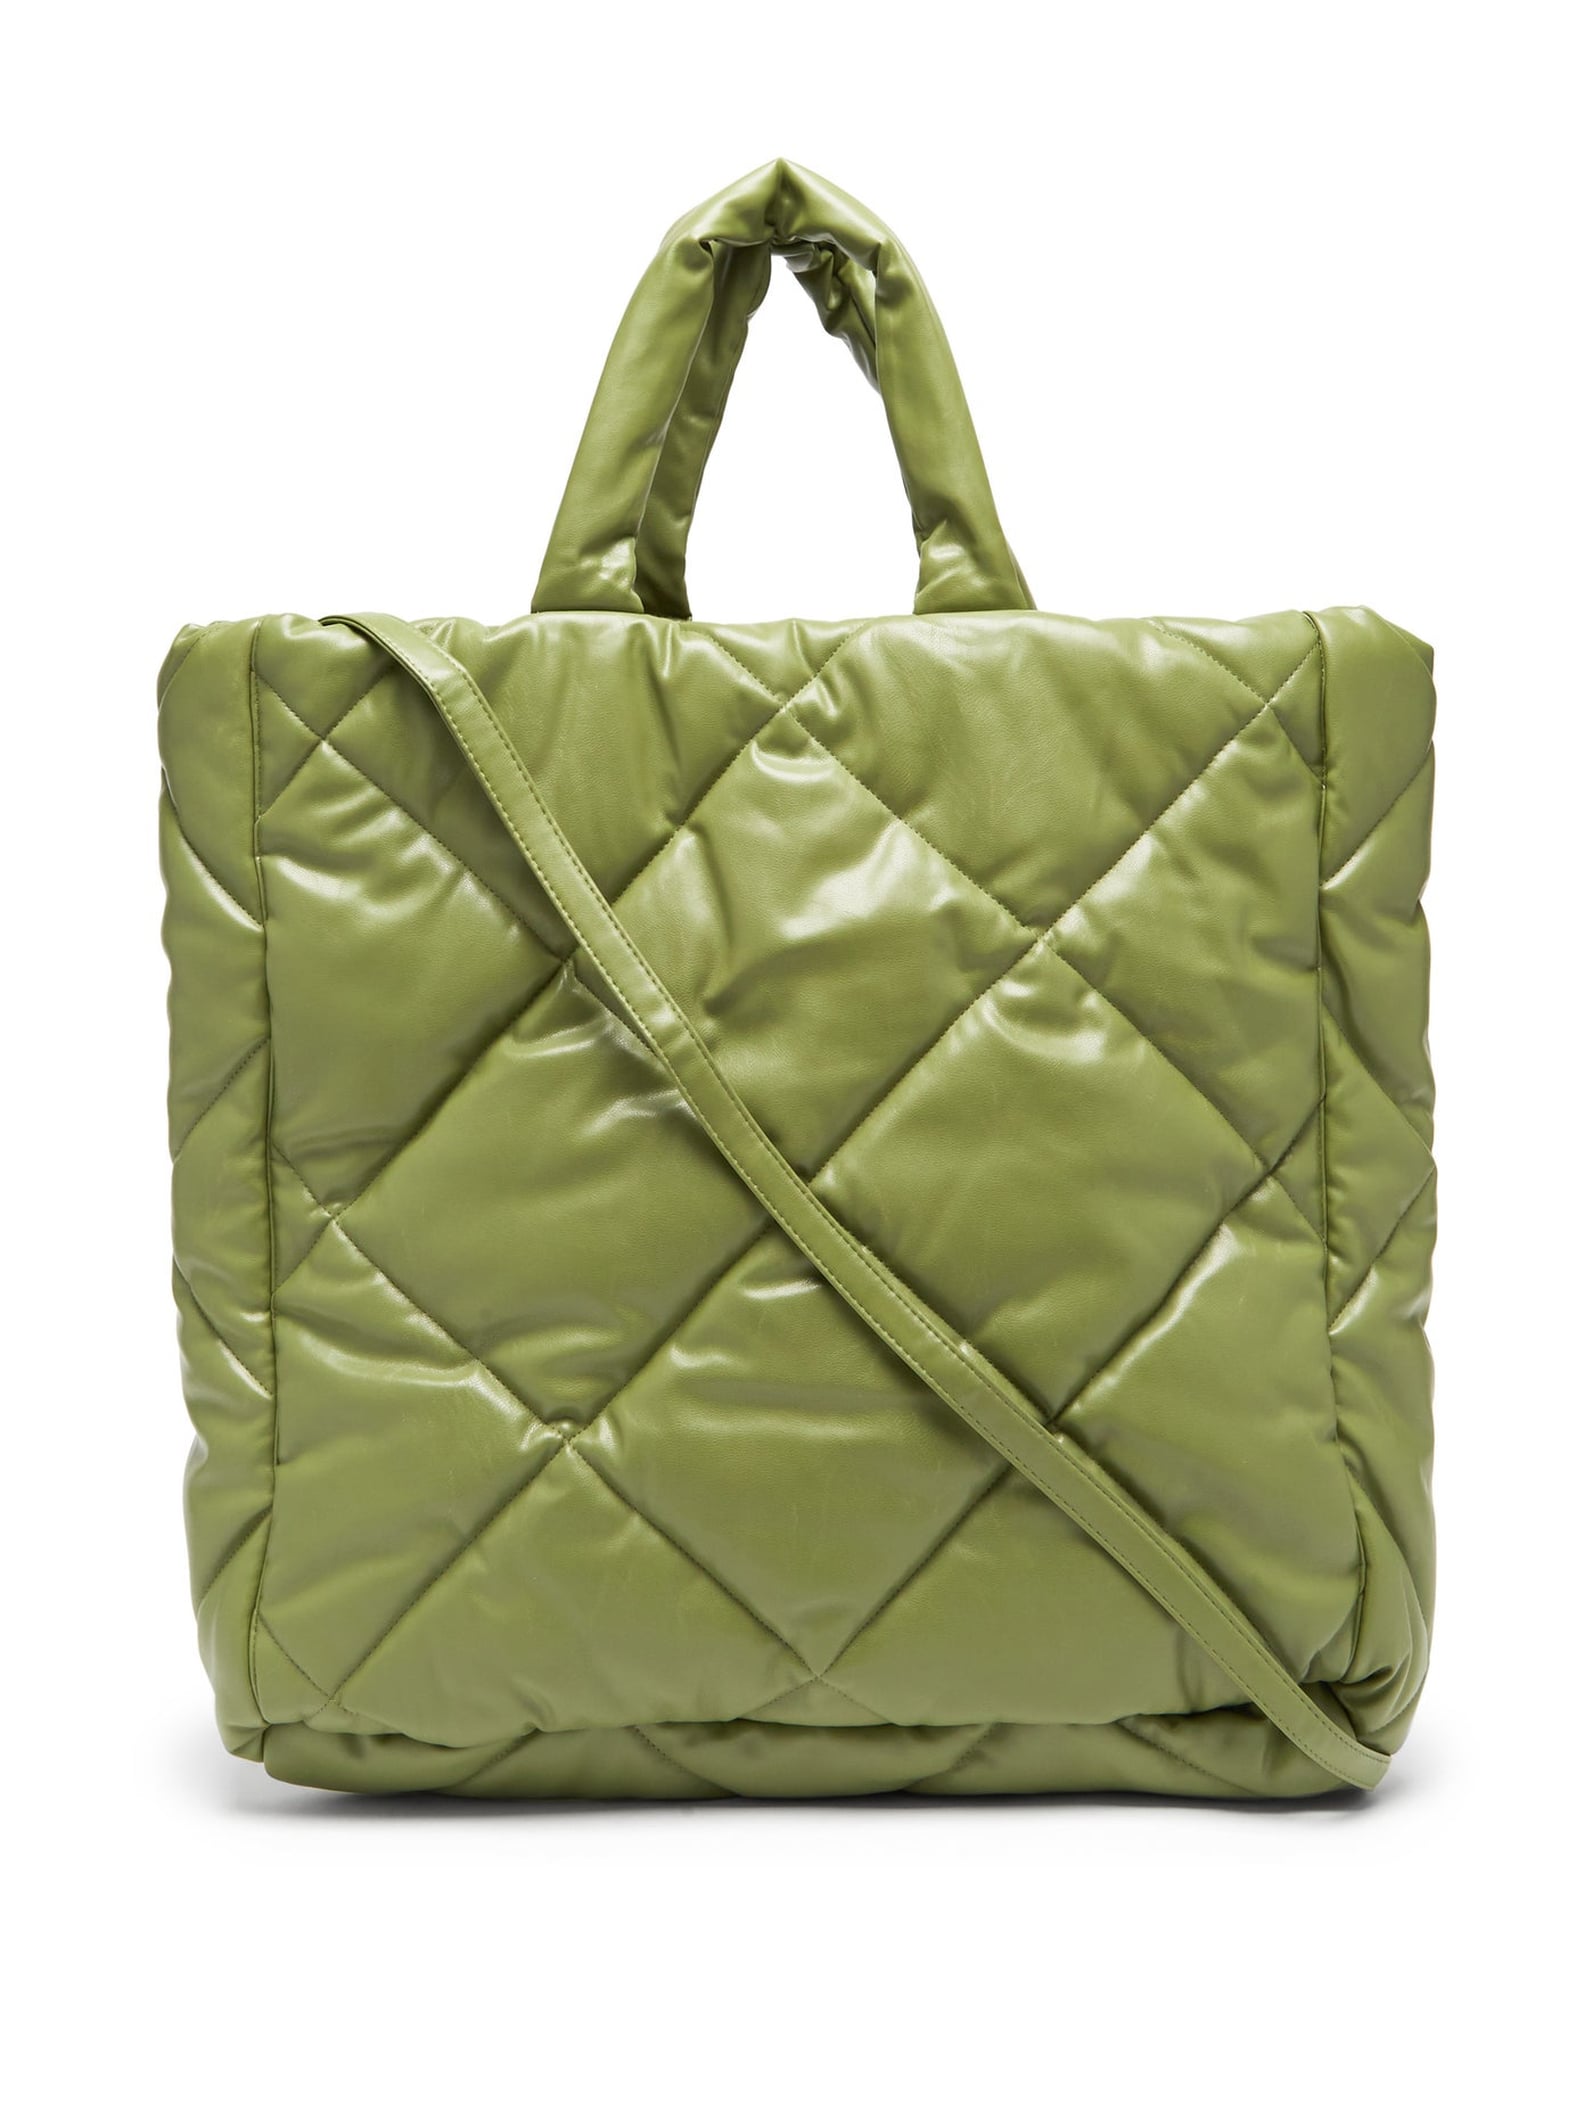 Shop the 18 Best Handbag Brands Under $500 in 2020 | POPSUGAR Fashion